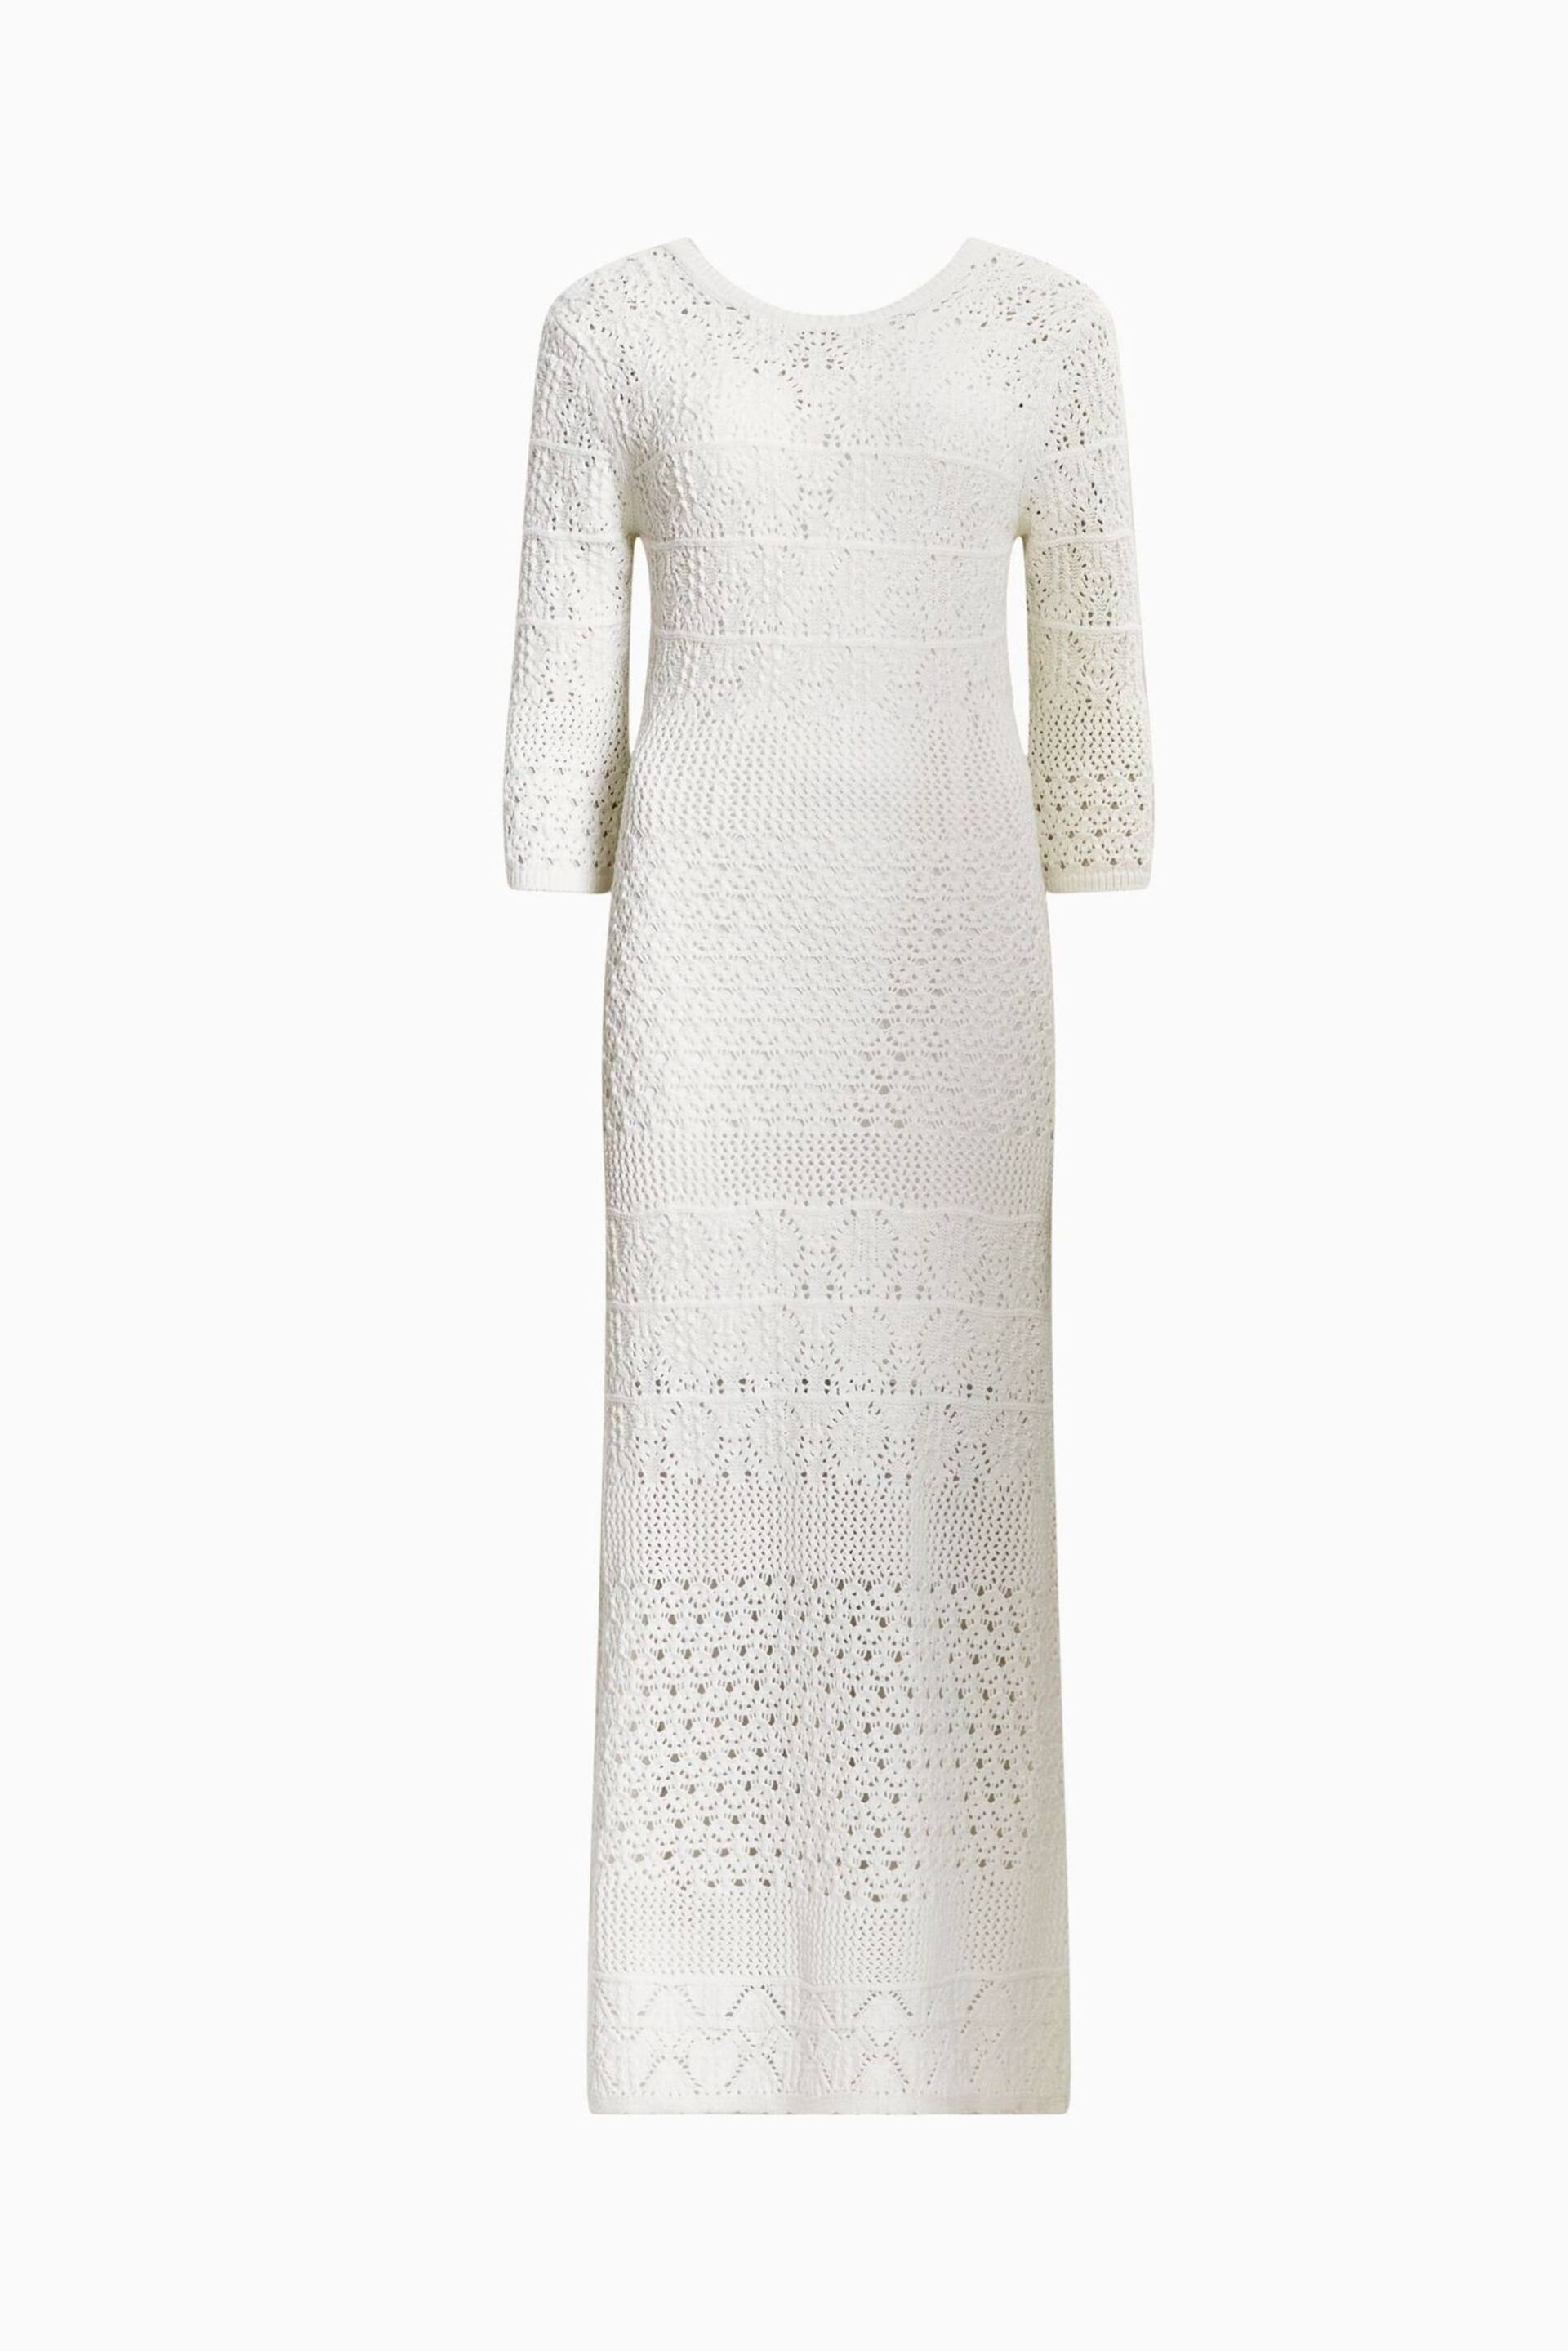 AllSaints White Briar Dress - Image 7 of 7